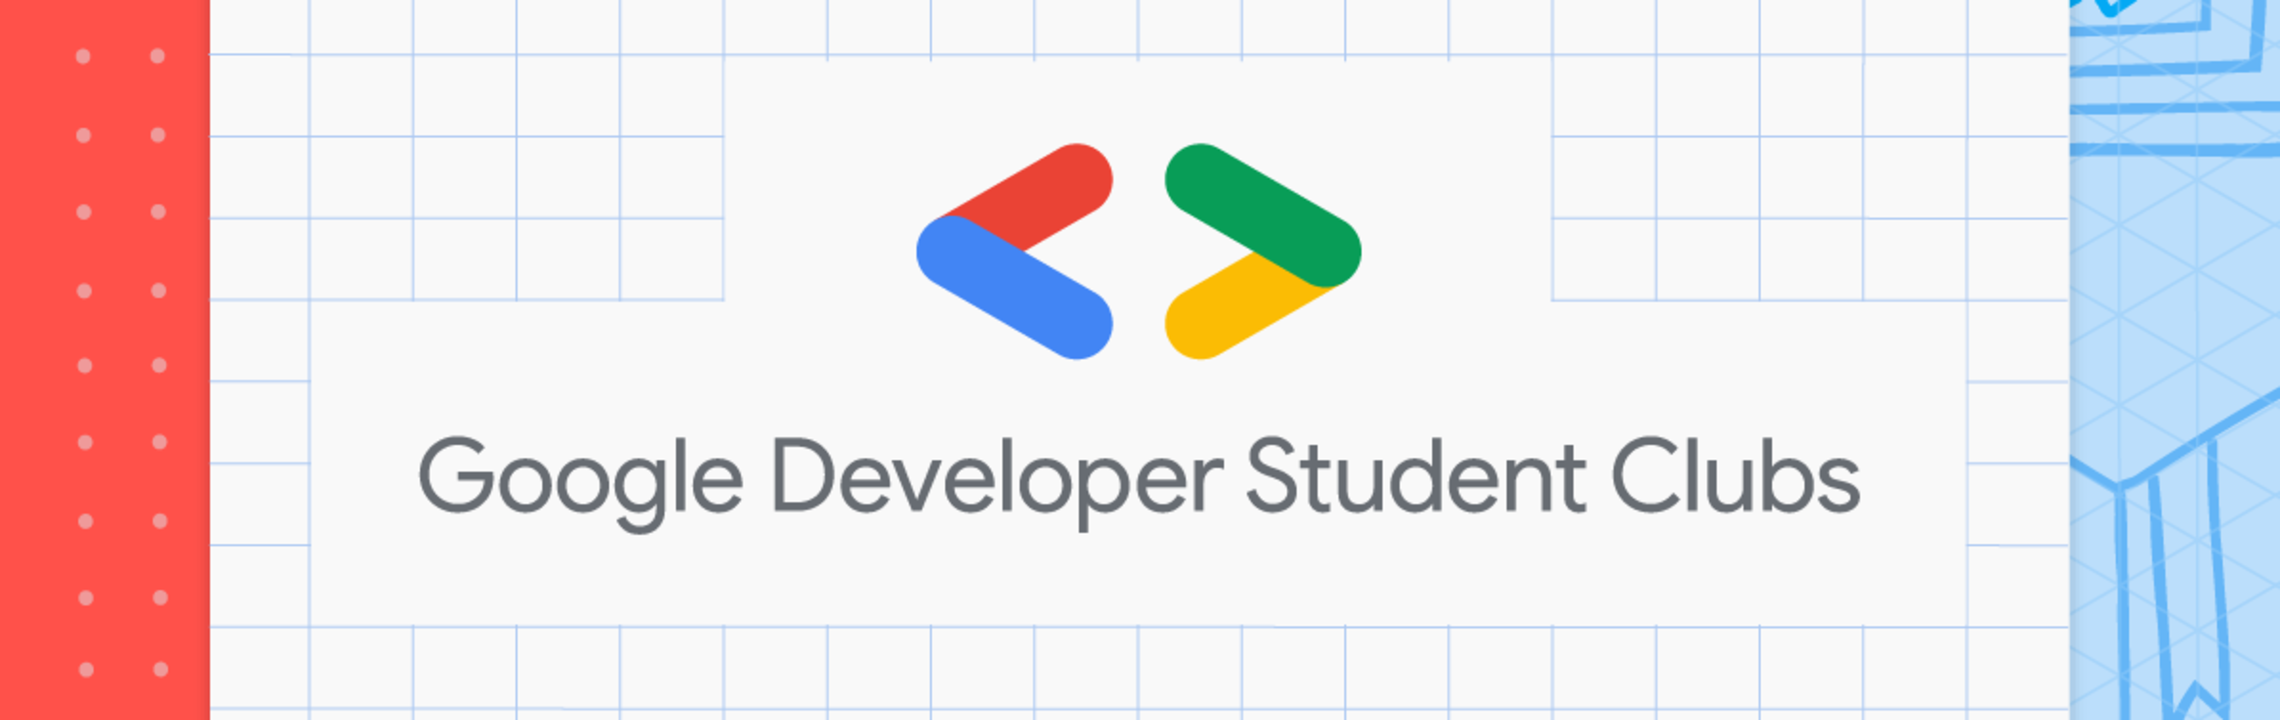 Google Developer Student Clubs McMaster University | Google Developer ...